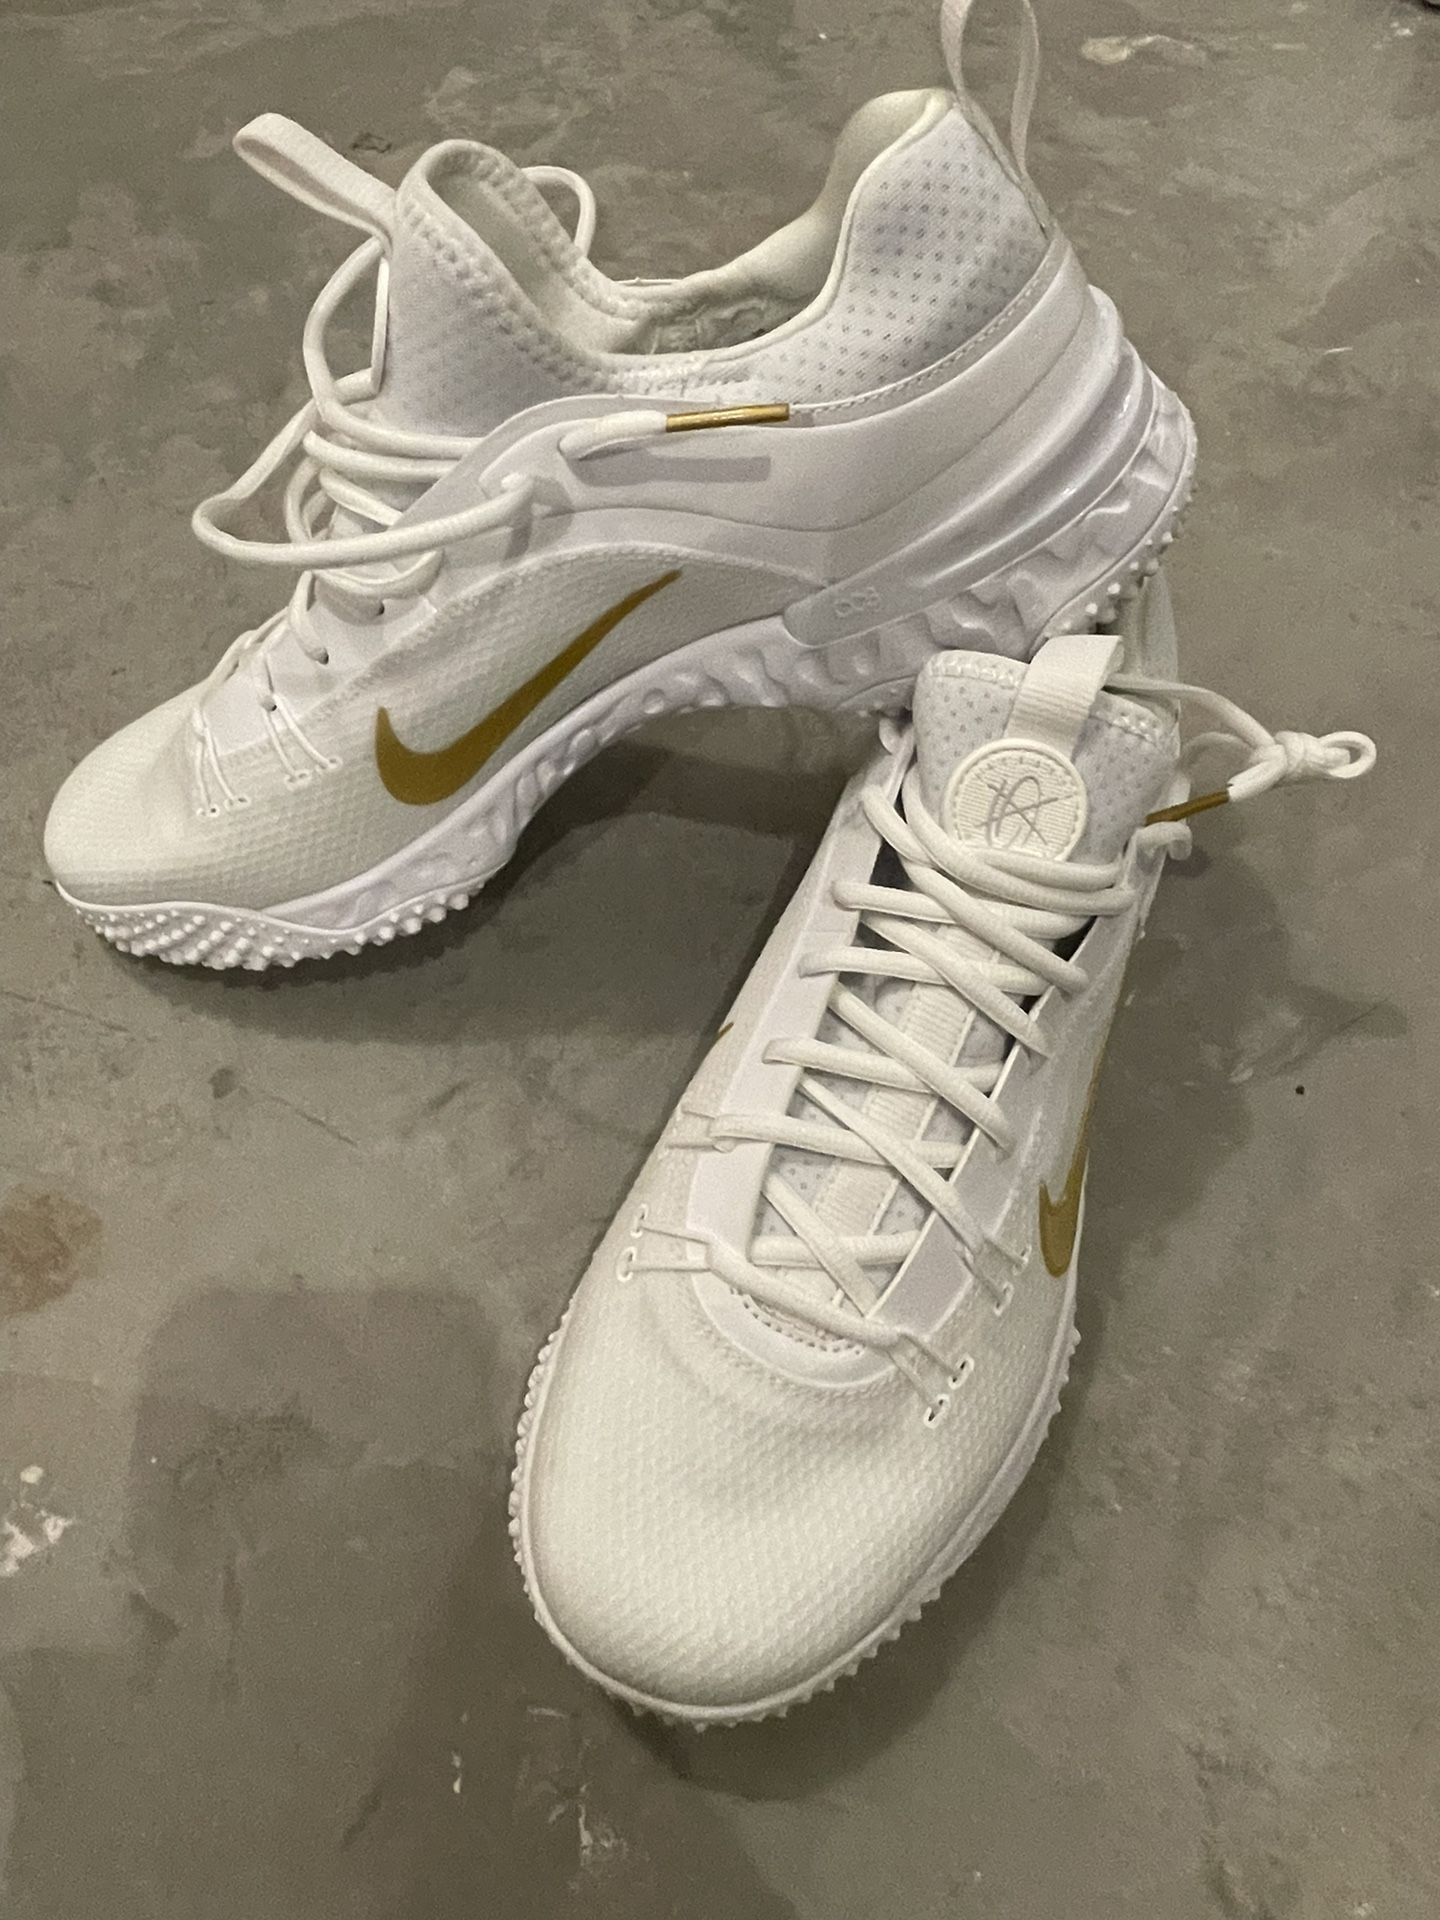 Nike Lacrosse Shoes (size 12)